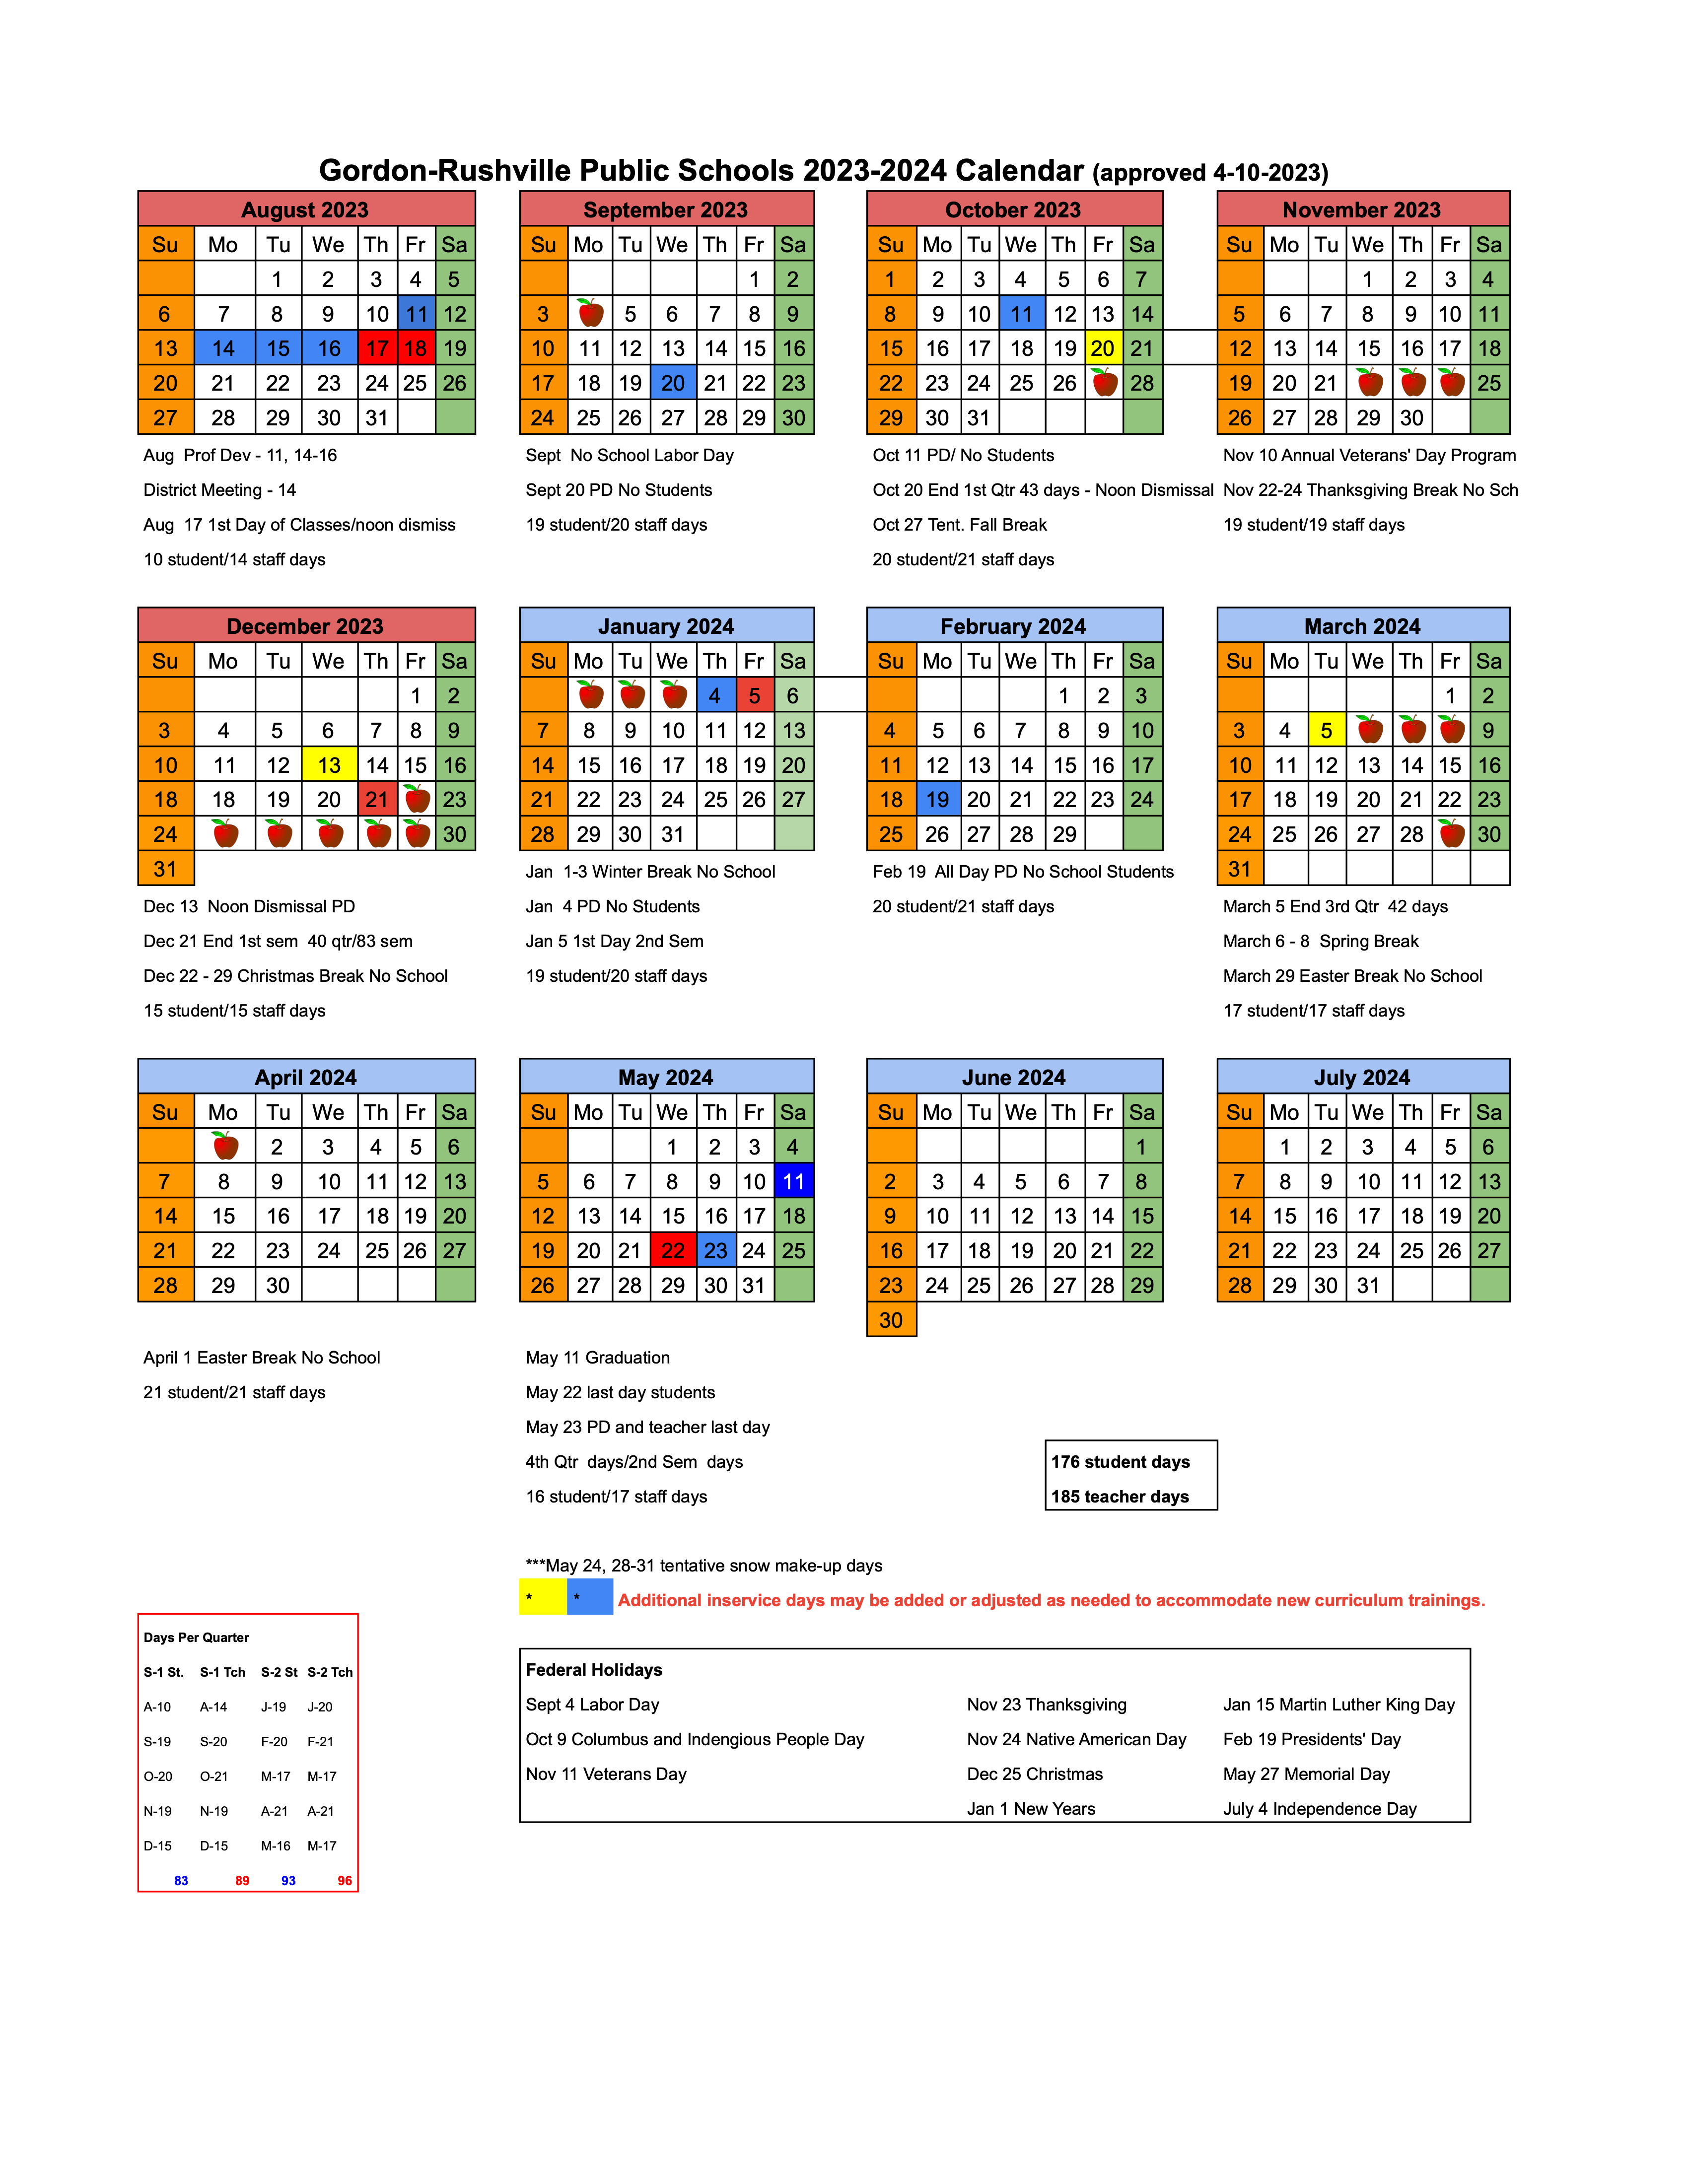 Grps School Calendar 2025 2026